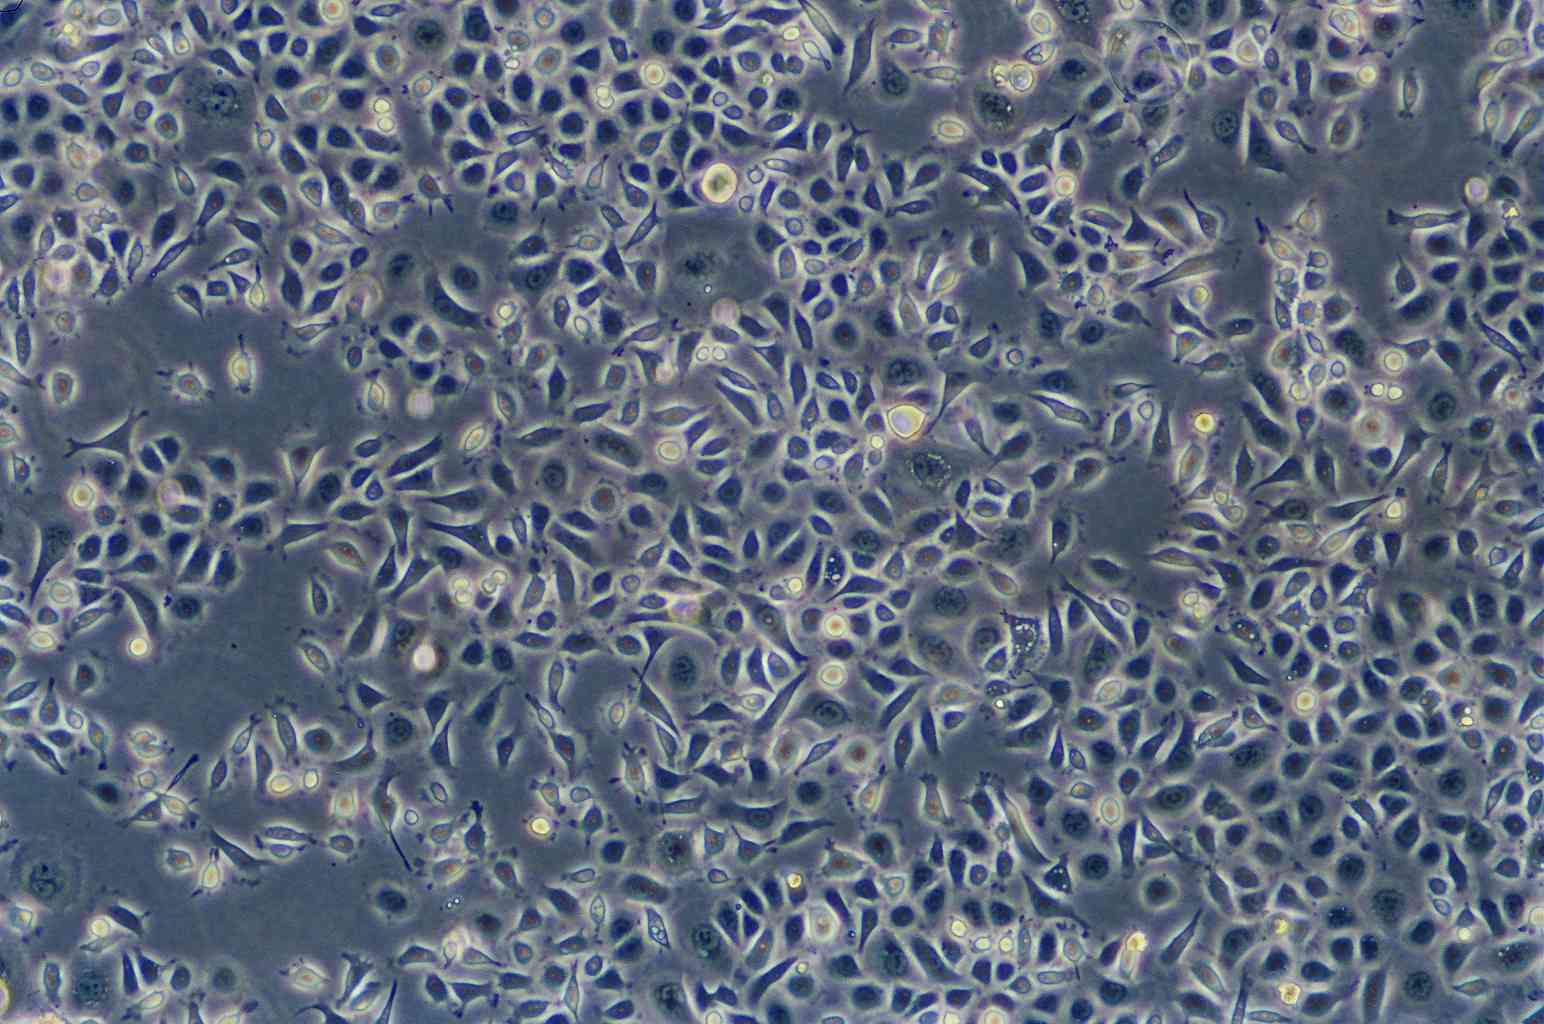 FU-MMT-1 epithelioid cells人子宫肉瘤细胞系